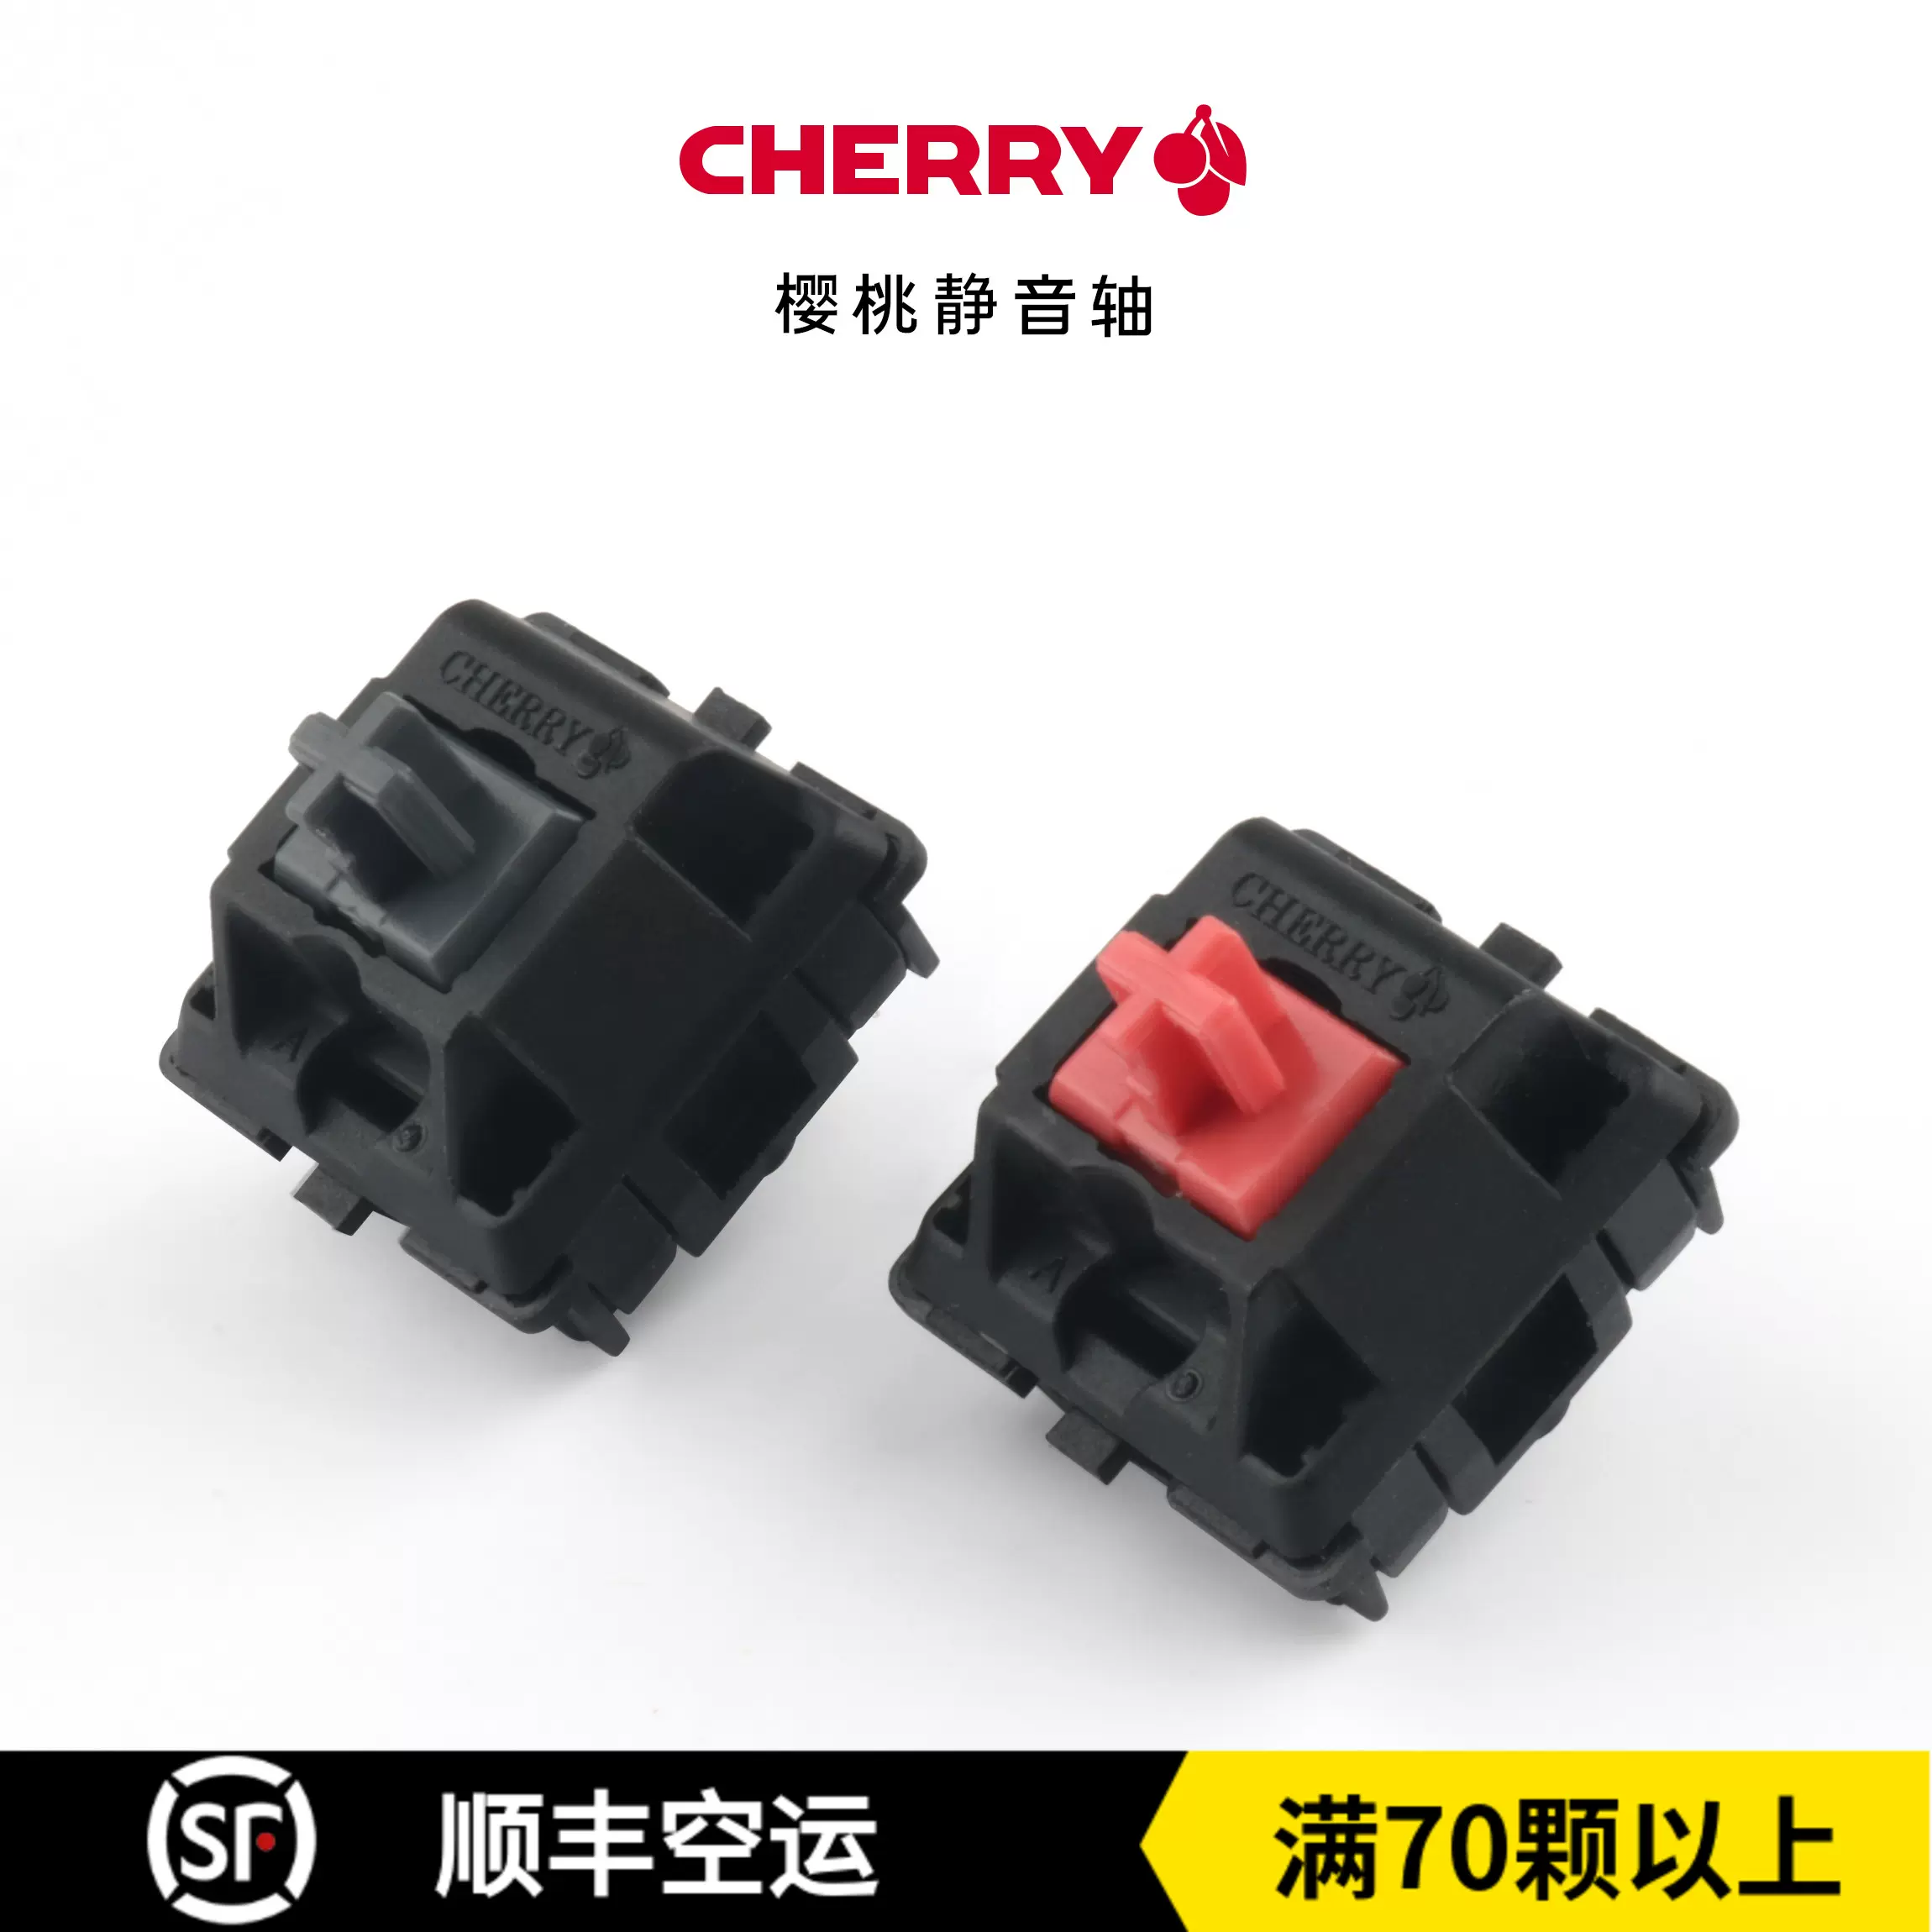 Cherry櫻桃MX靜音紅軸靜音黑軸軸體開關三腳客製化機械鍵盤軸體-Taobao